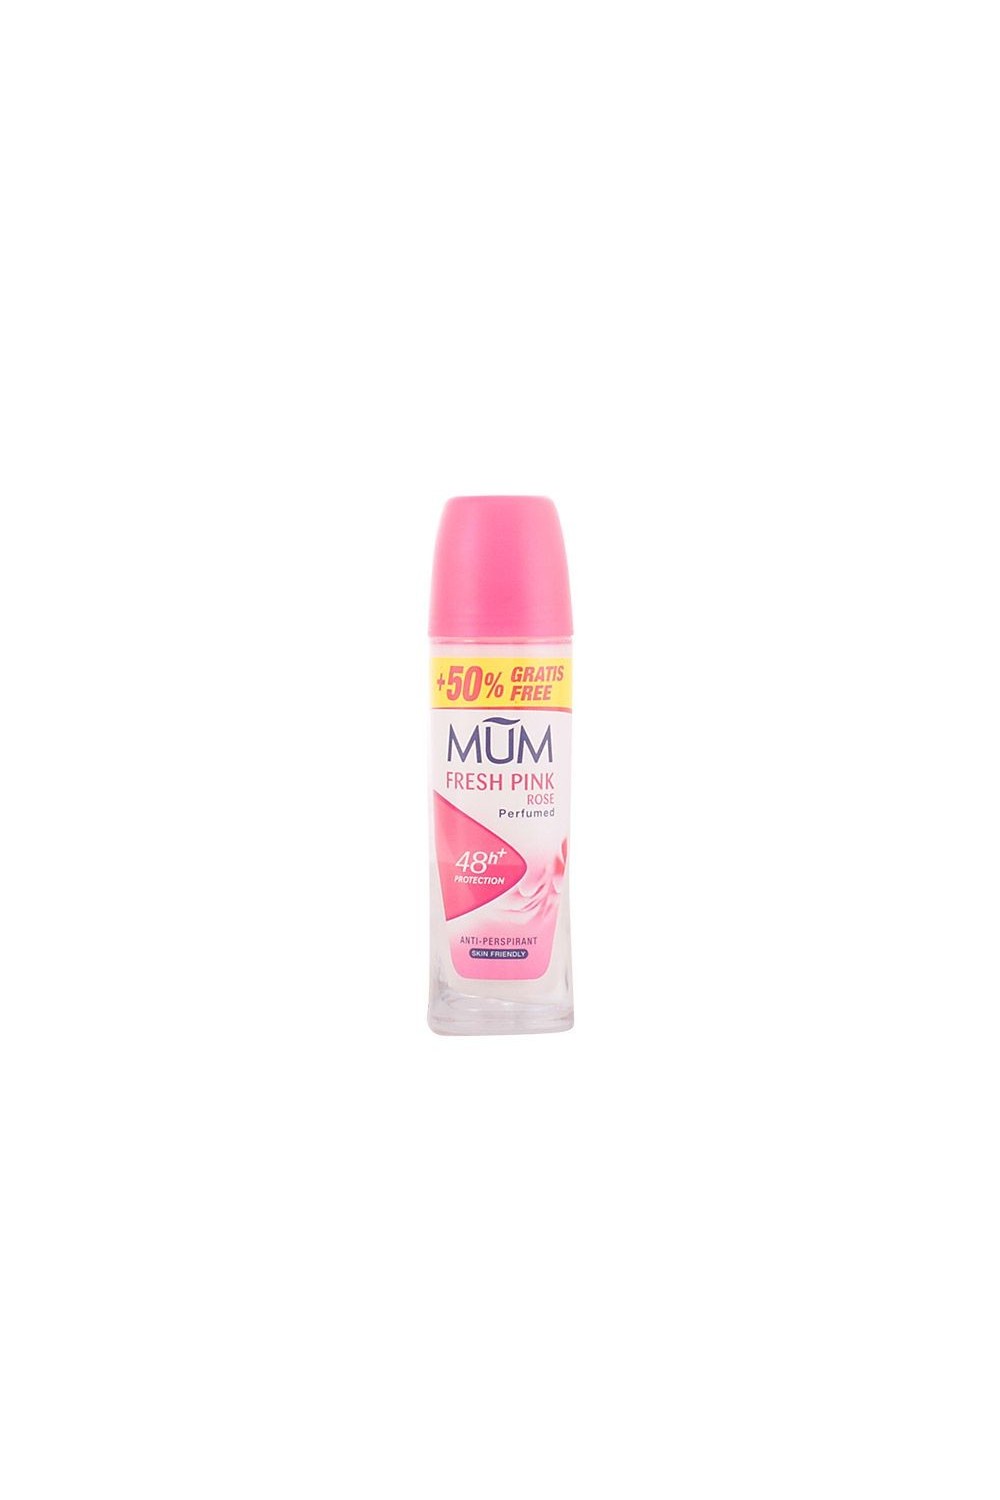 Mum Fresh Pink Rose Roll On Deodorant 50ml